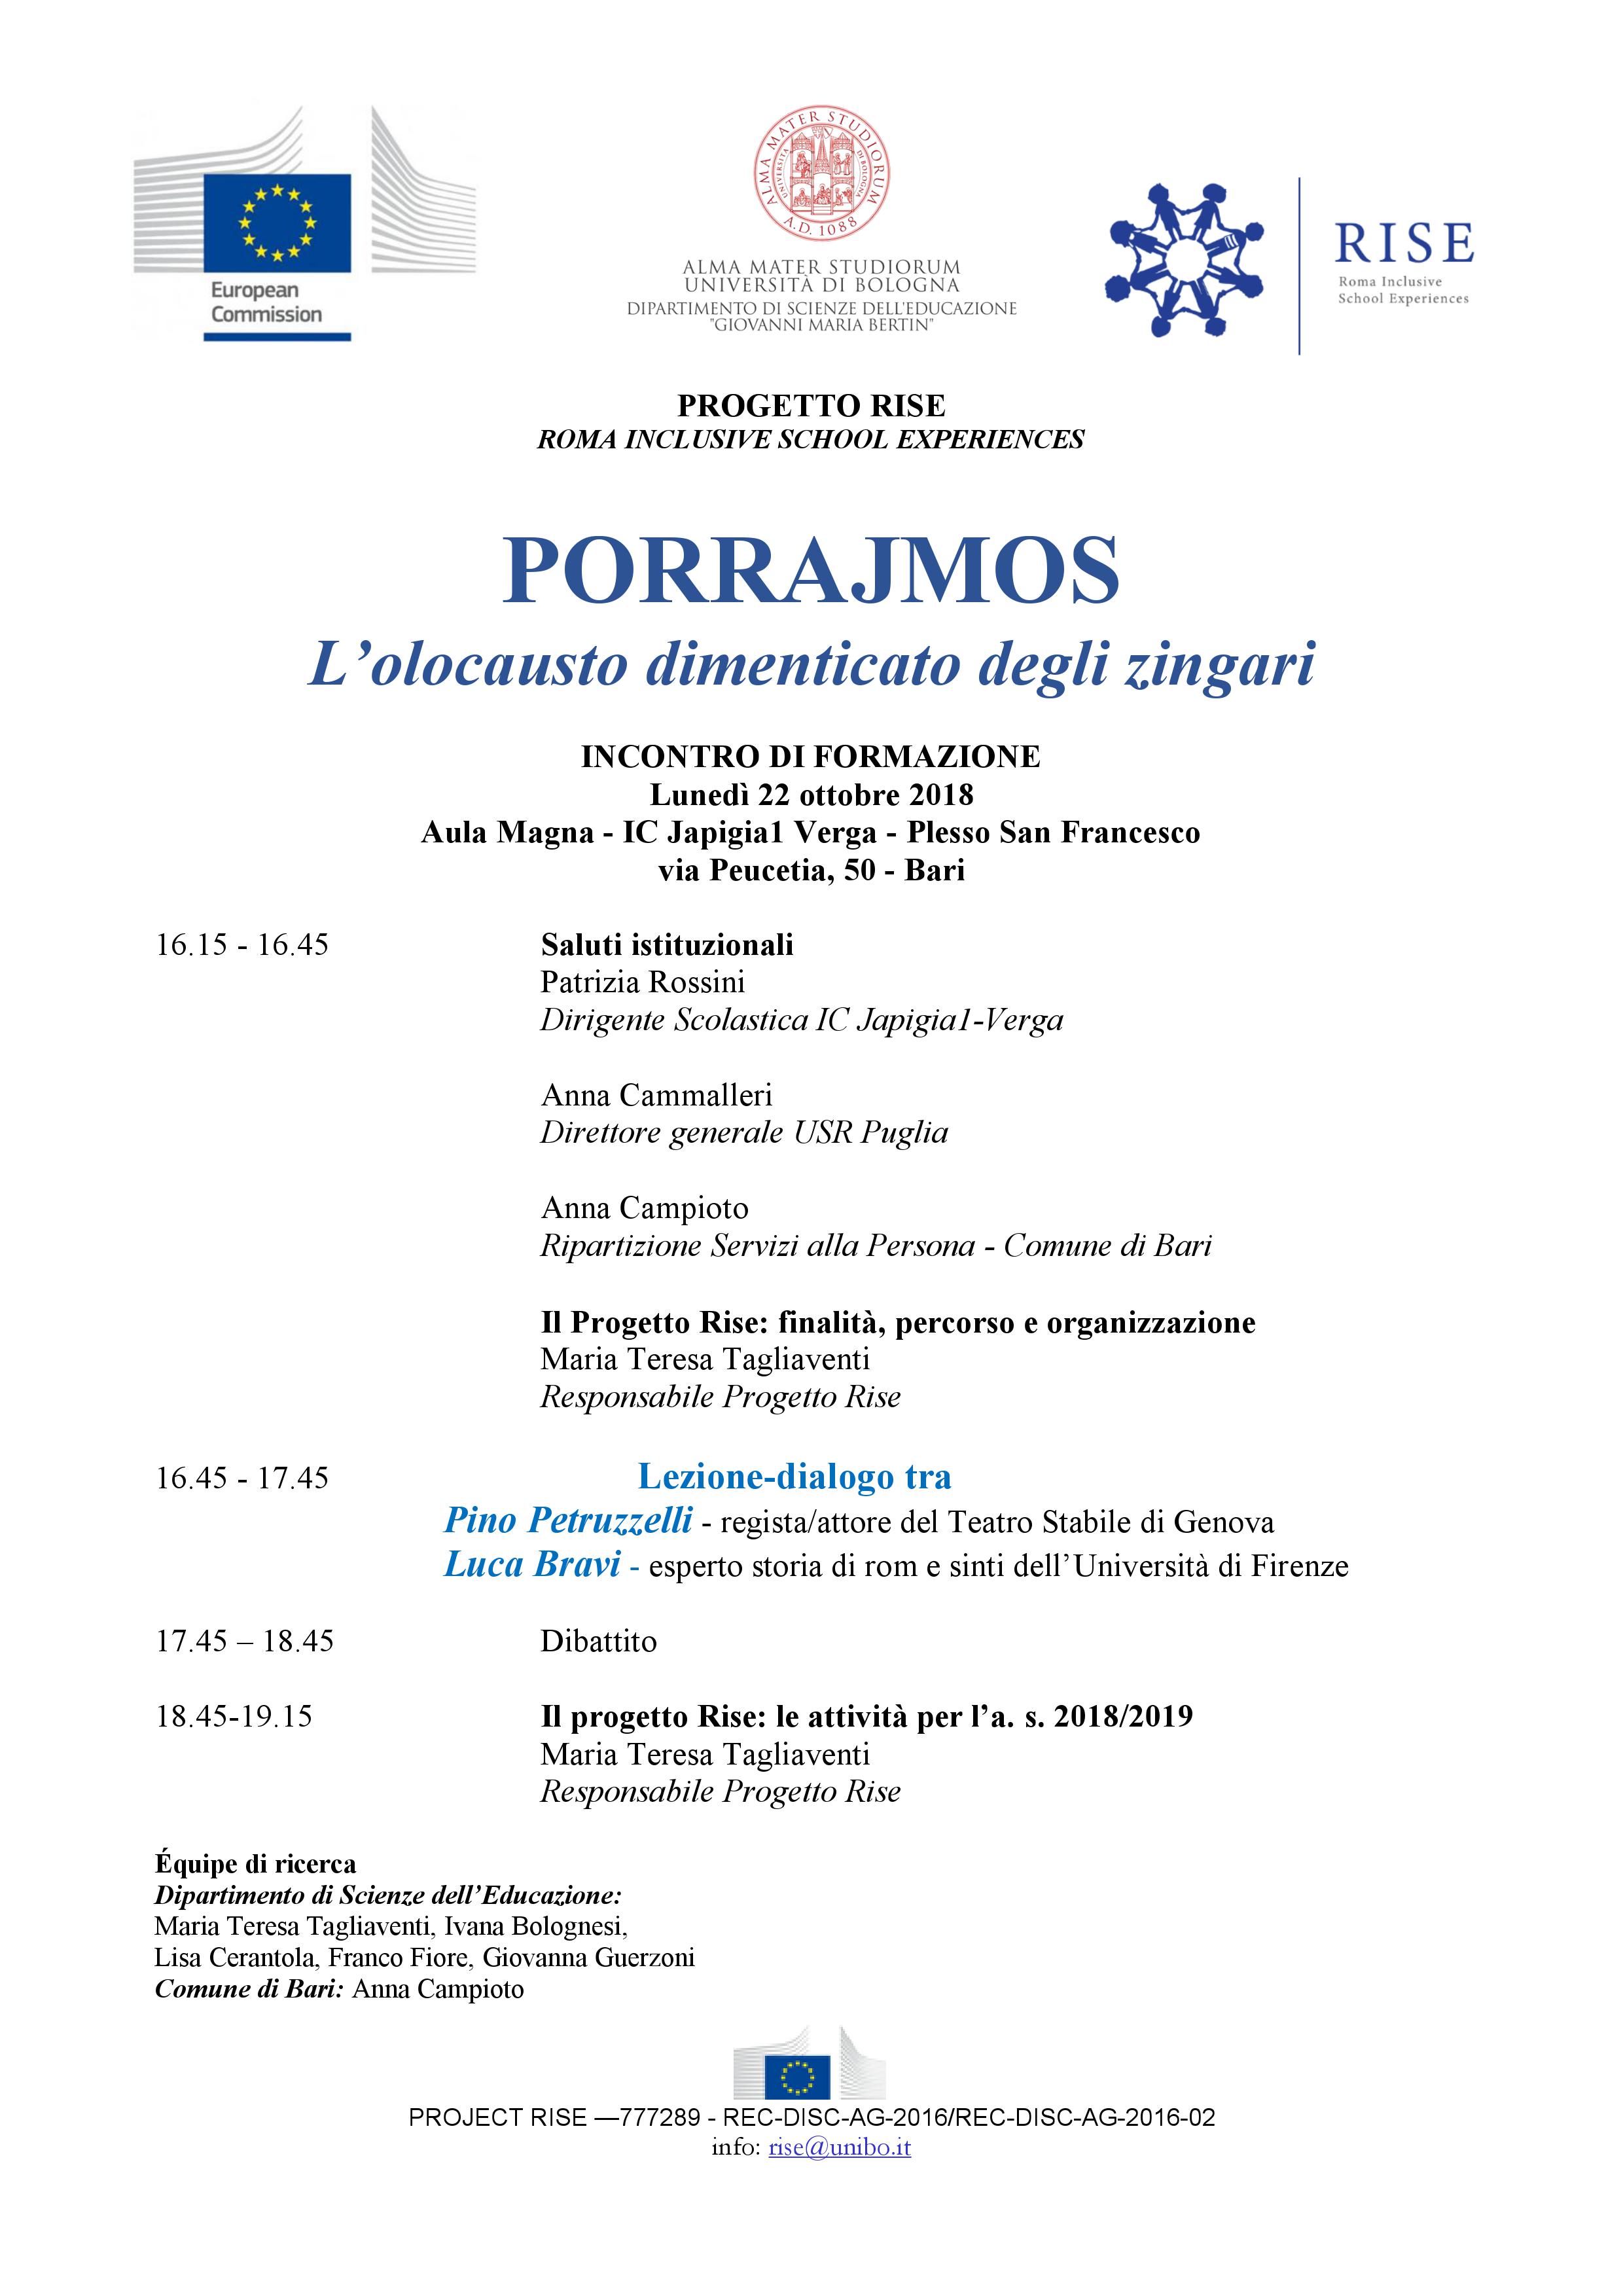 Program of Porrajmos meeting